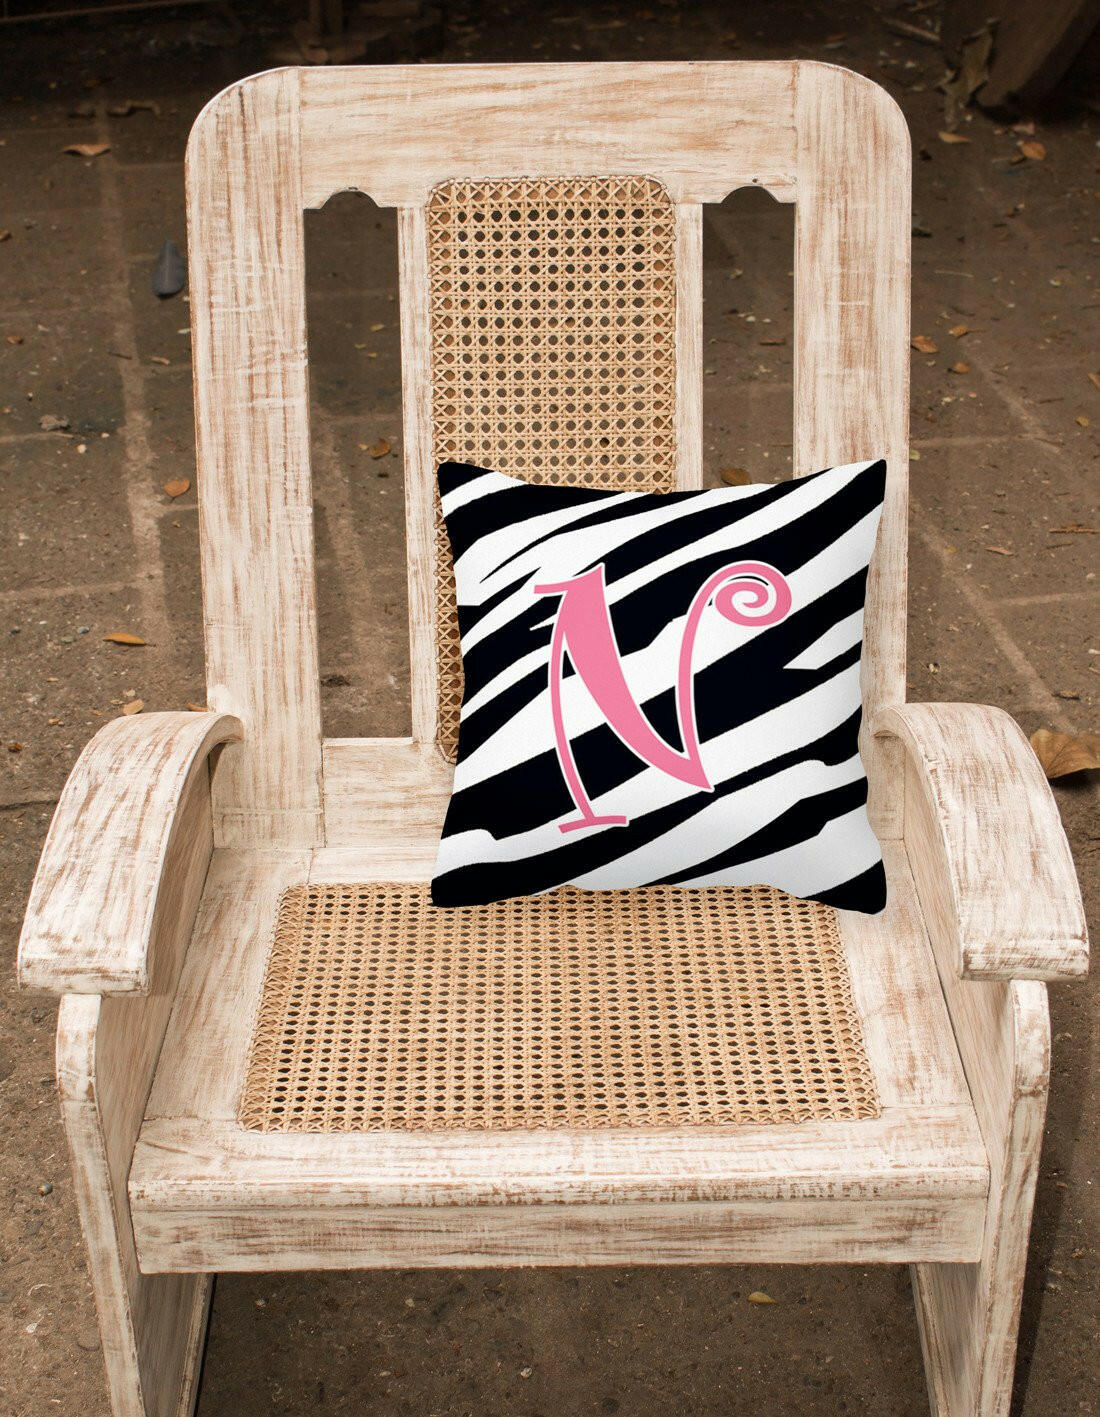 Monogram Initial N Zebra Stripe and Pink Decorative Canvas Fabric Pillow CJ1037 - the-store.com